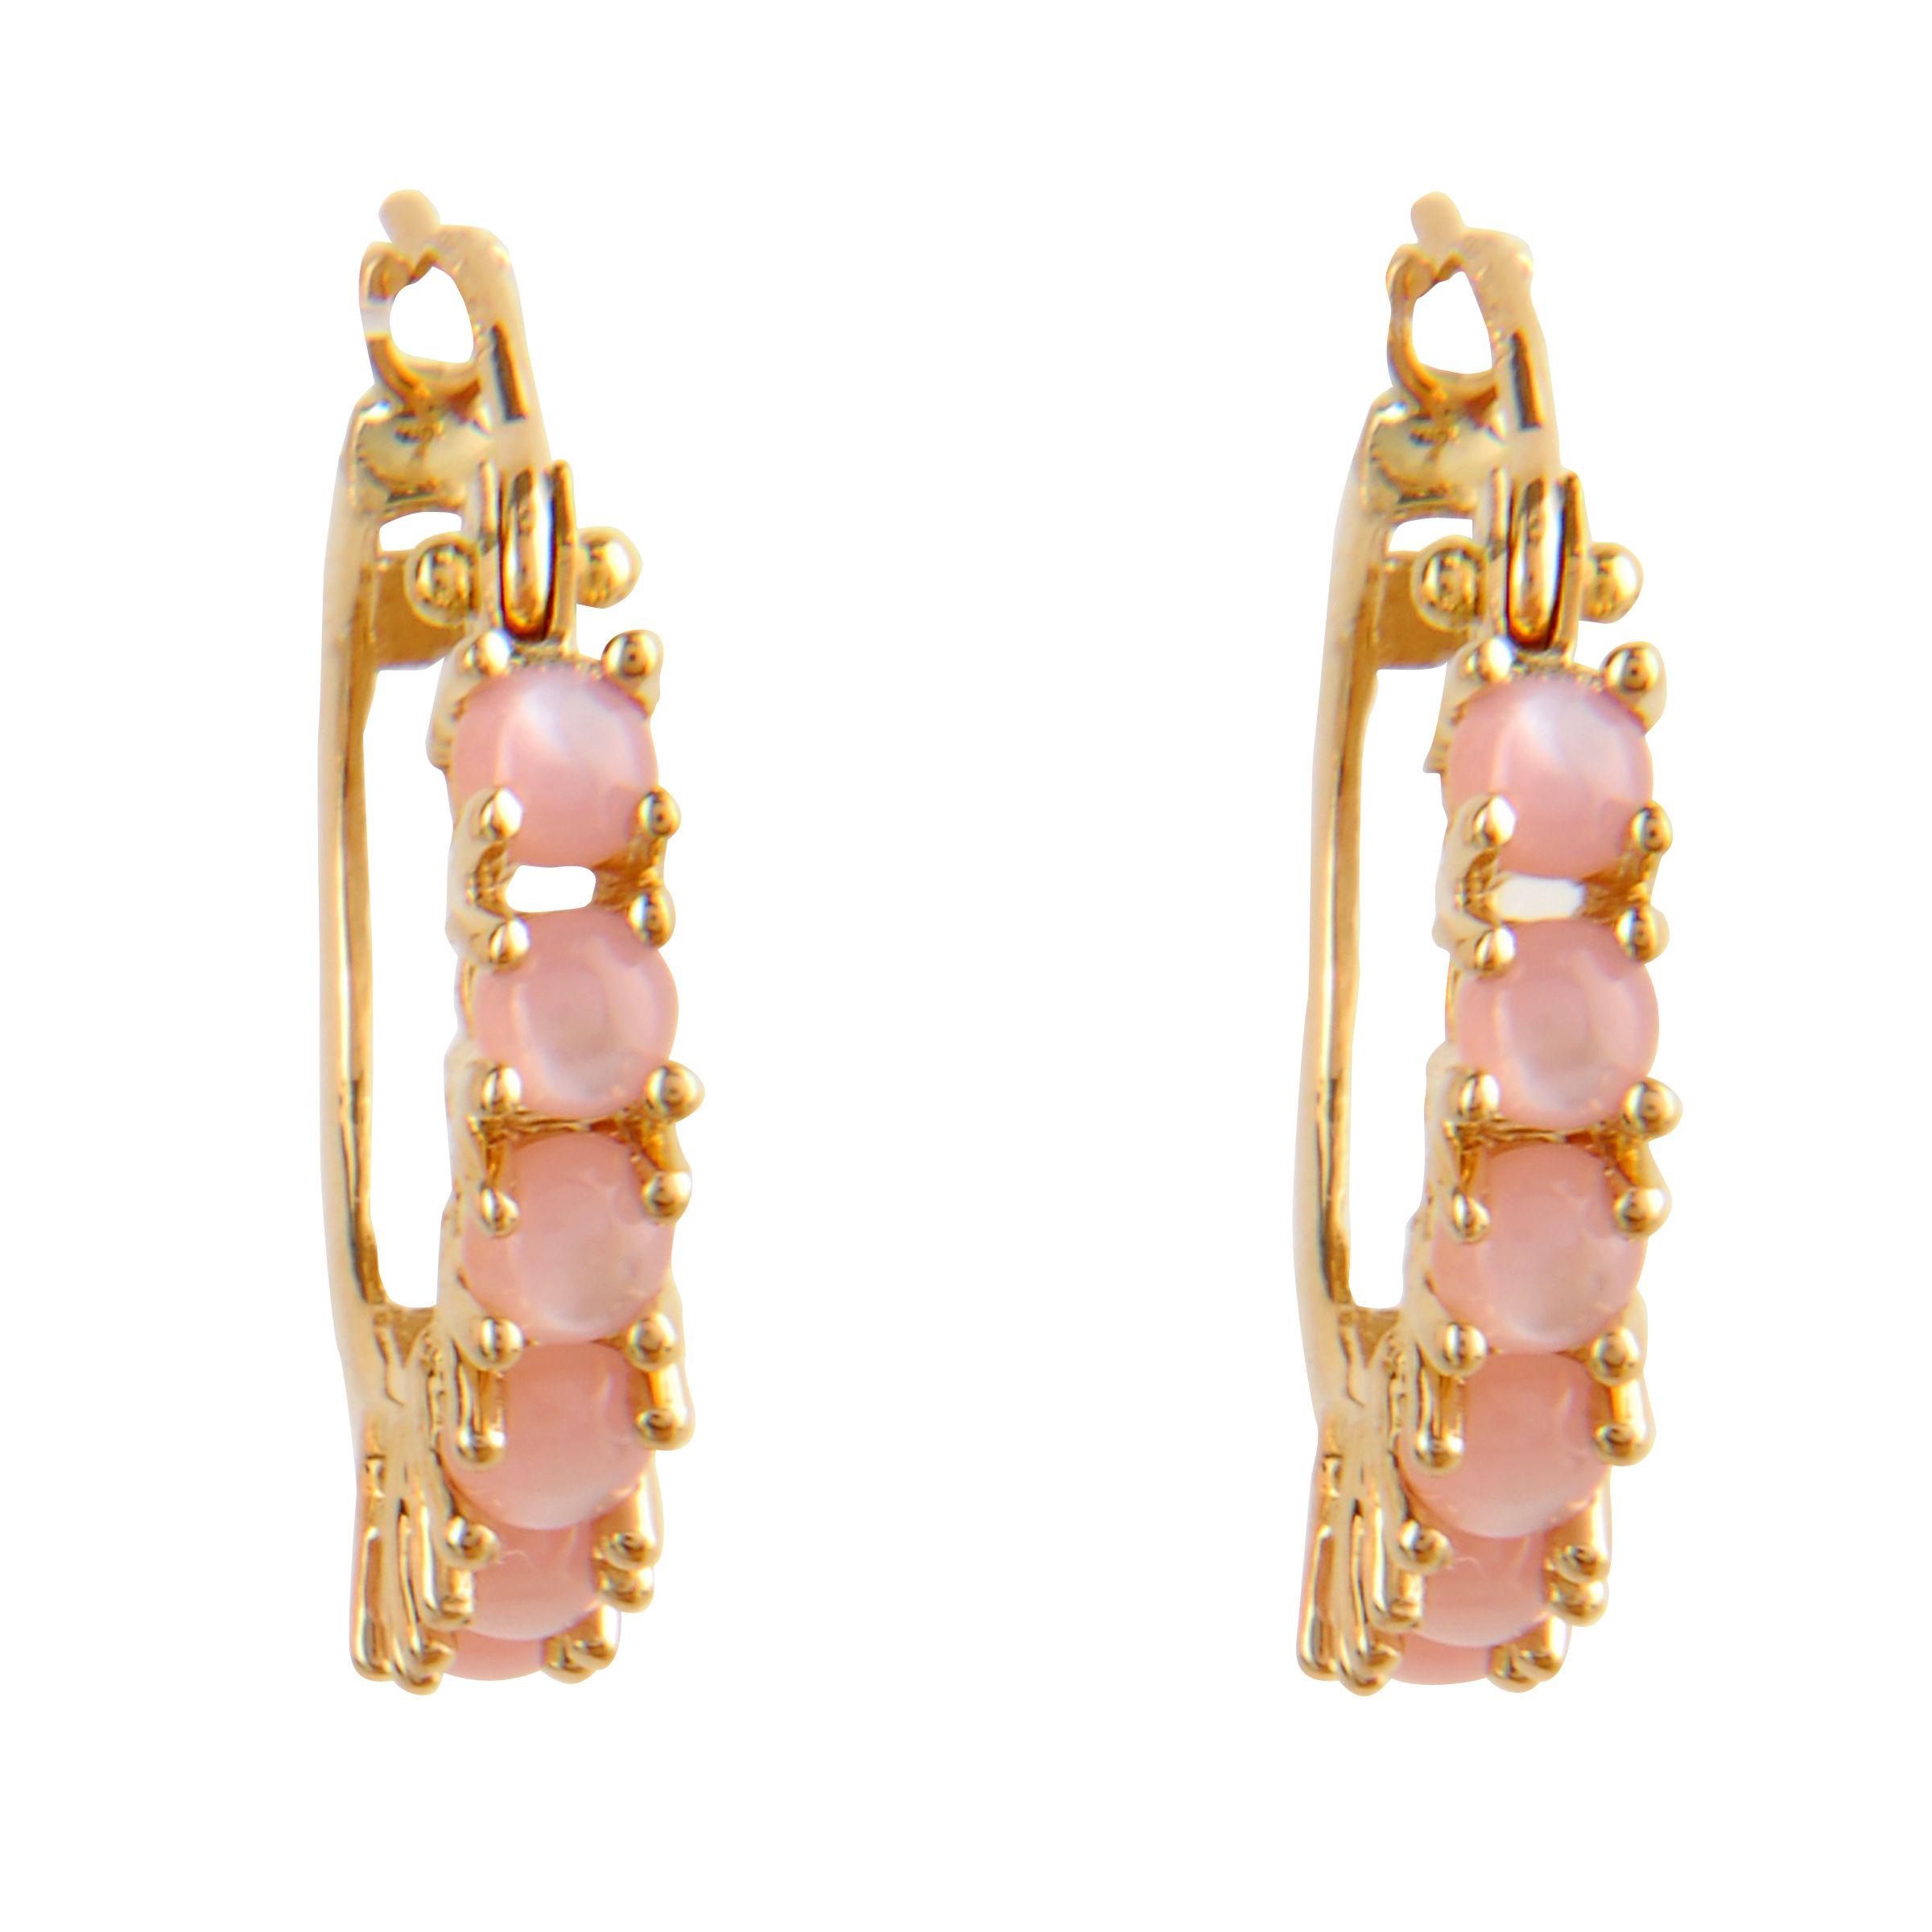 Pink Mother-of-Pearl Hoop Earrings. 10K Yellow Gold